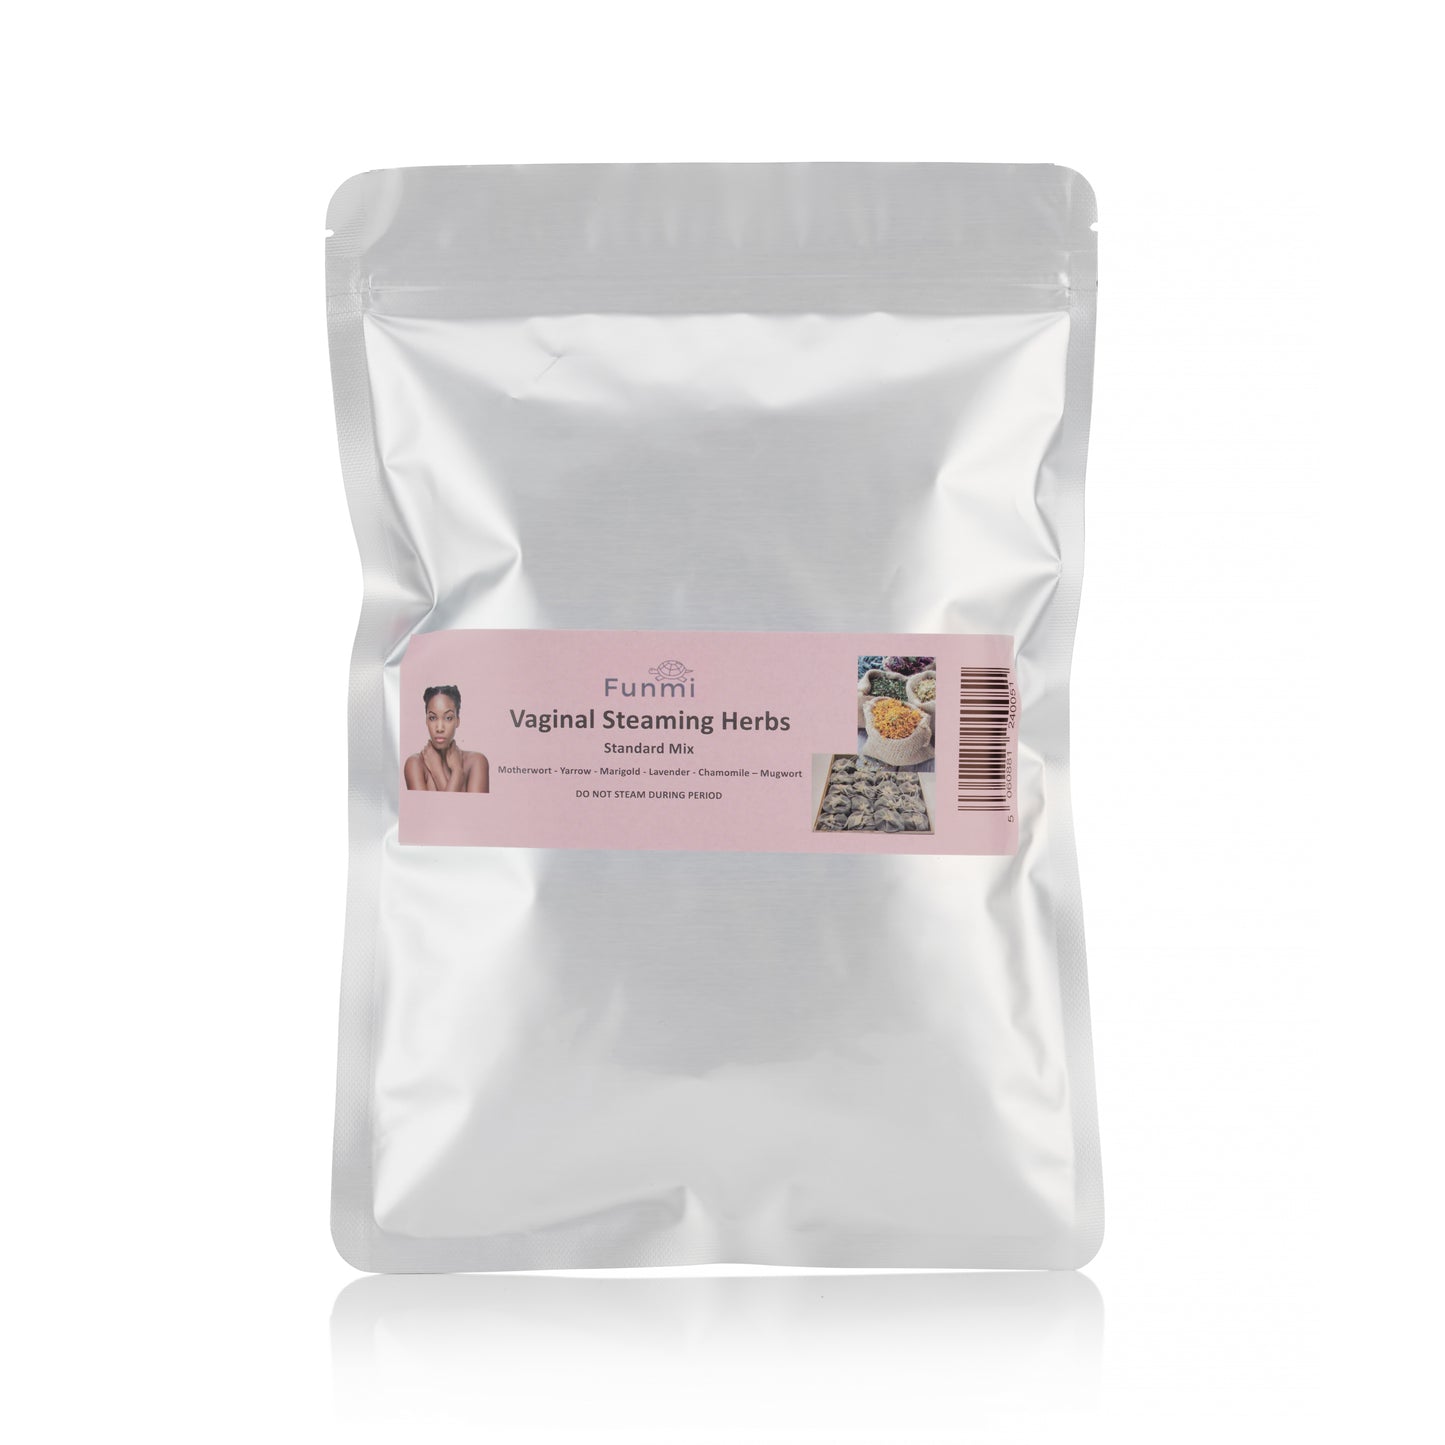 Funmi Vaginal Steaming Herbs Standard Mix herb pack